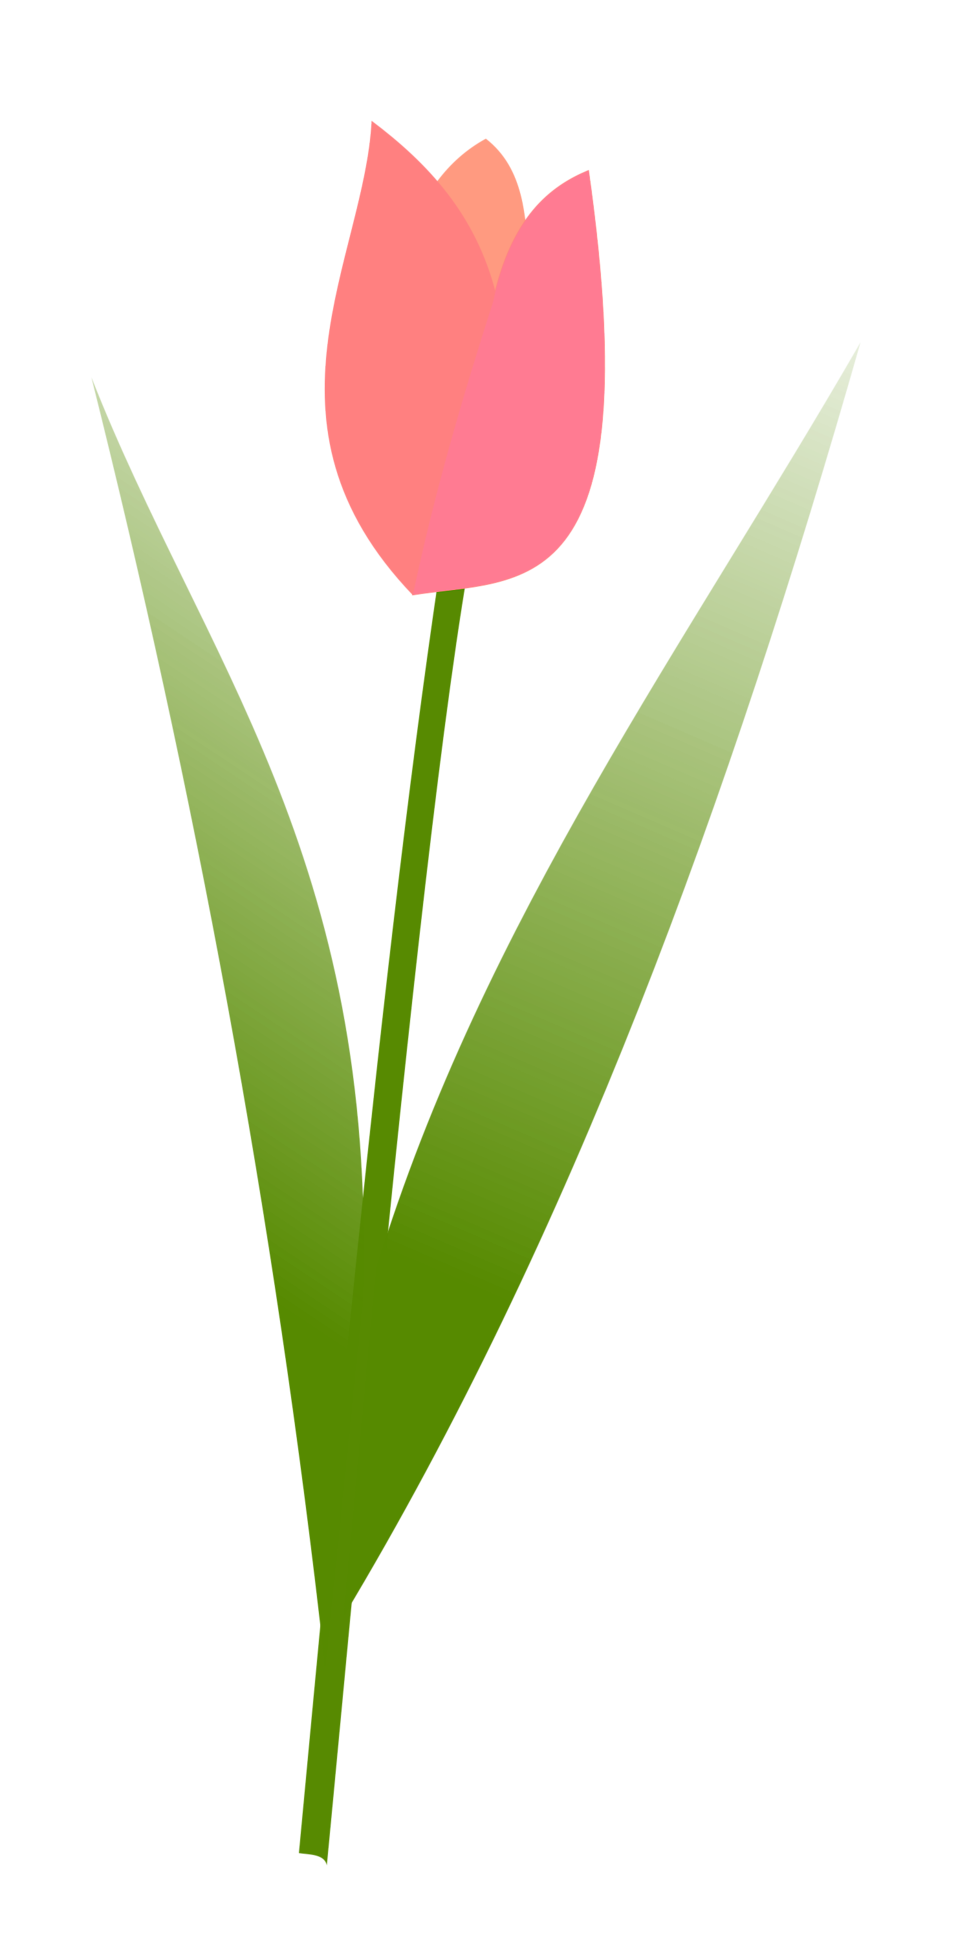 Free stock photo illustration. Clipart banner tulip